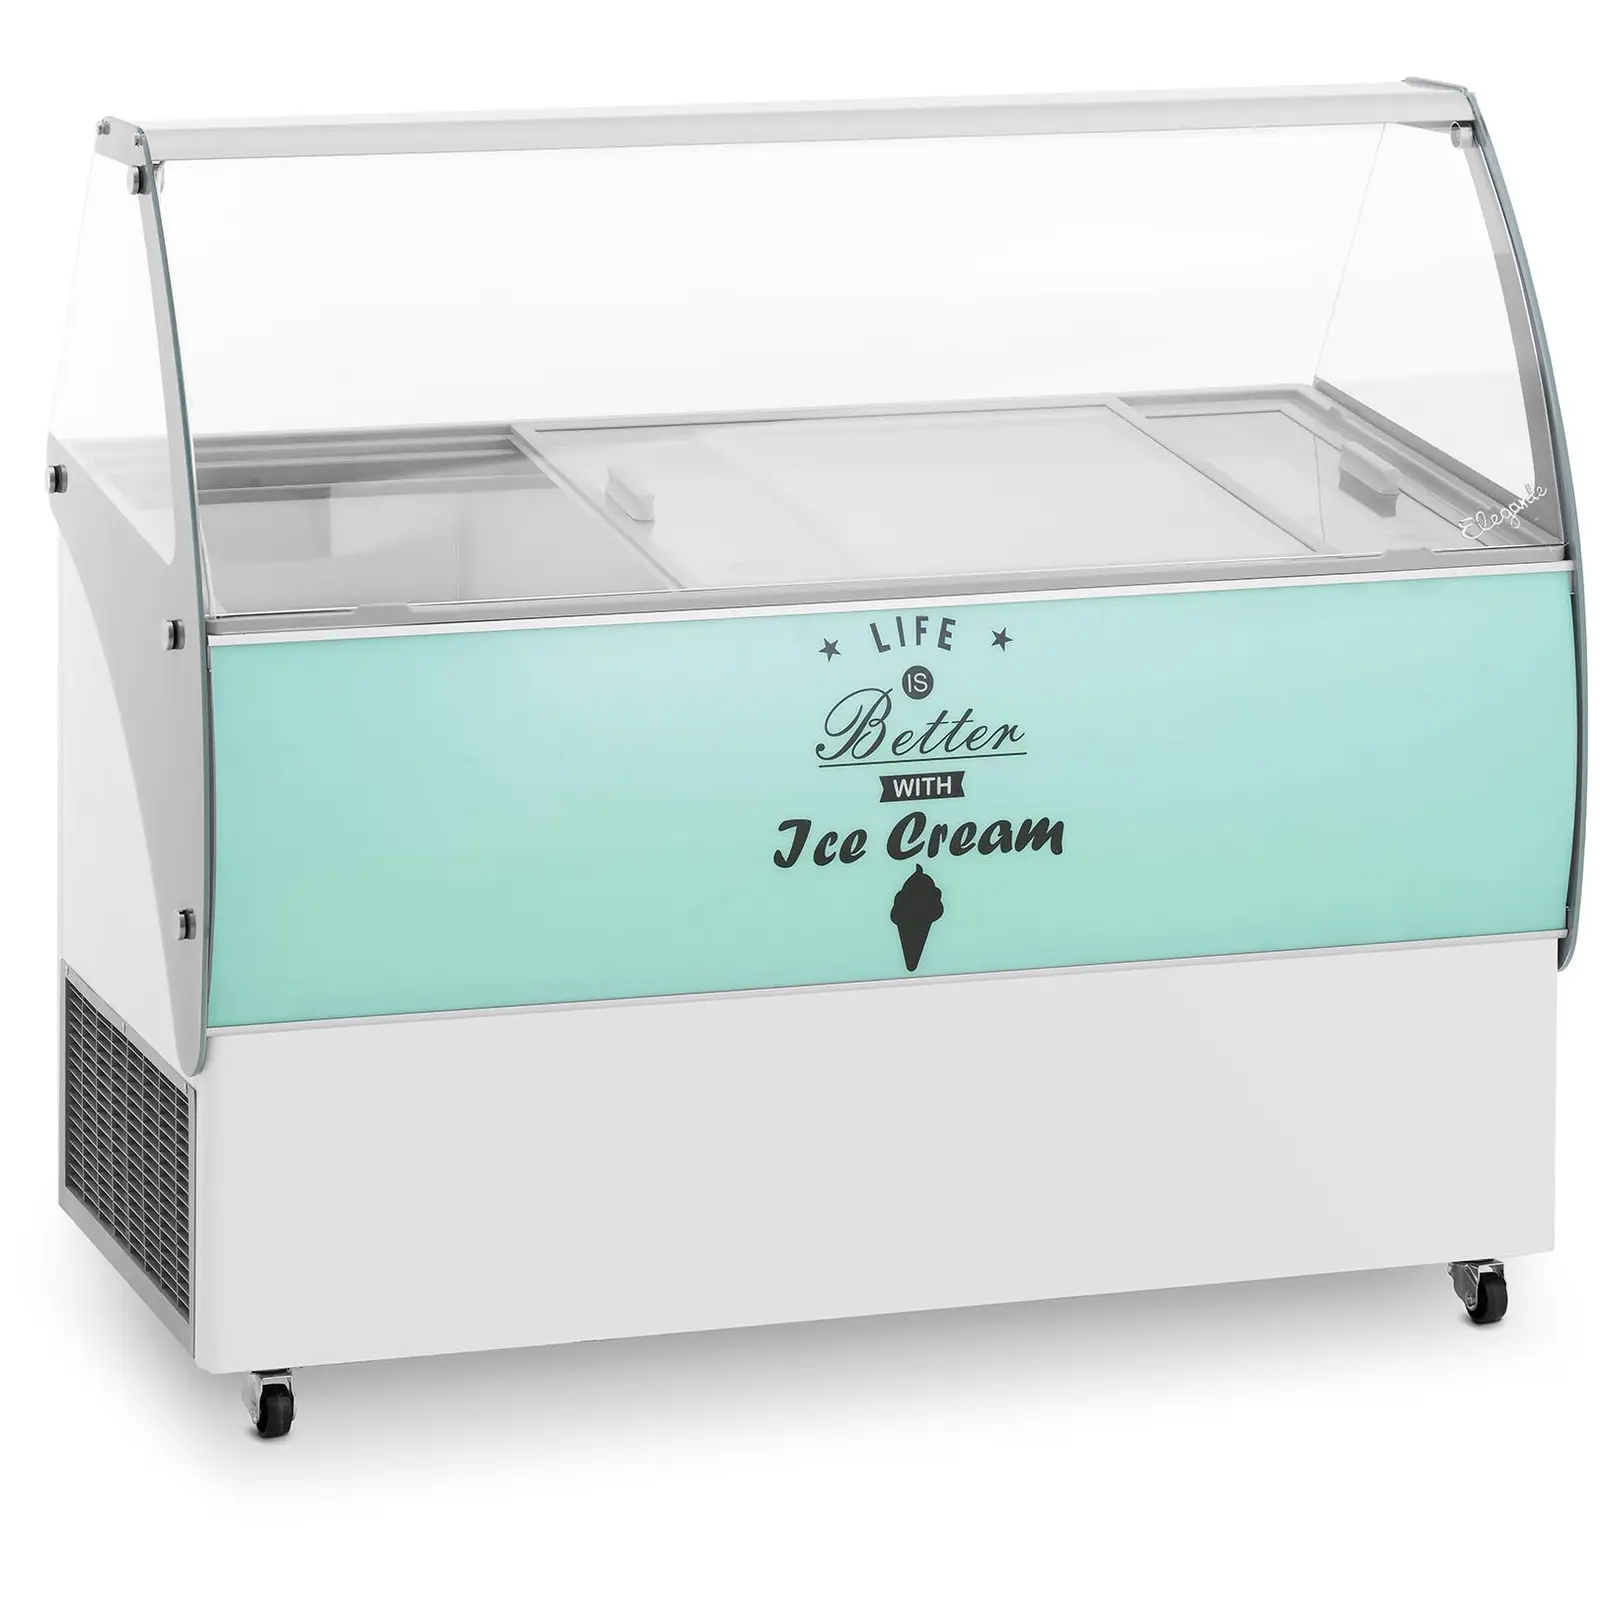 Ice cream counter - 456 L - LED - 4 wheels - light green / silver